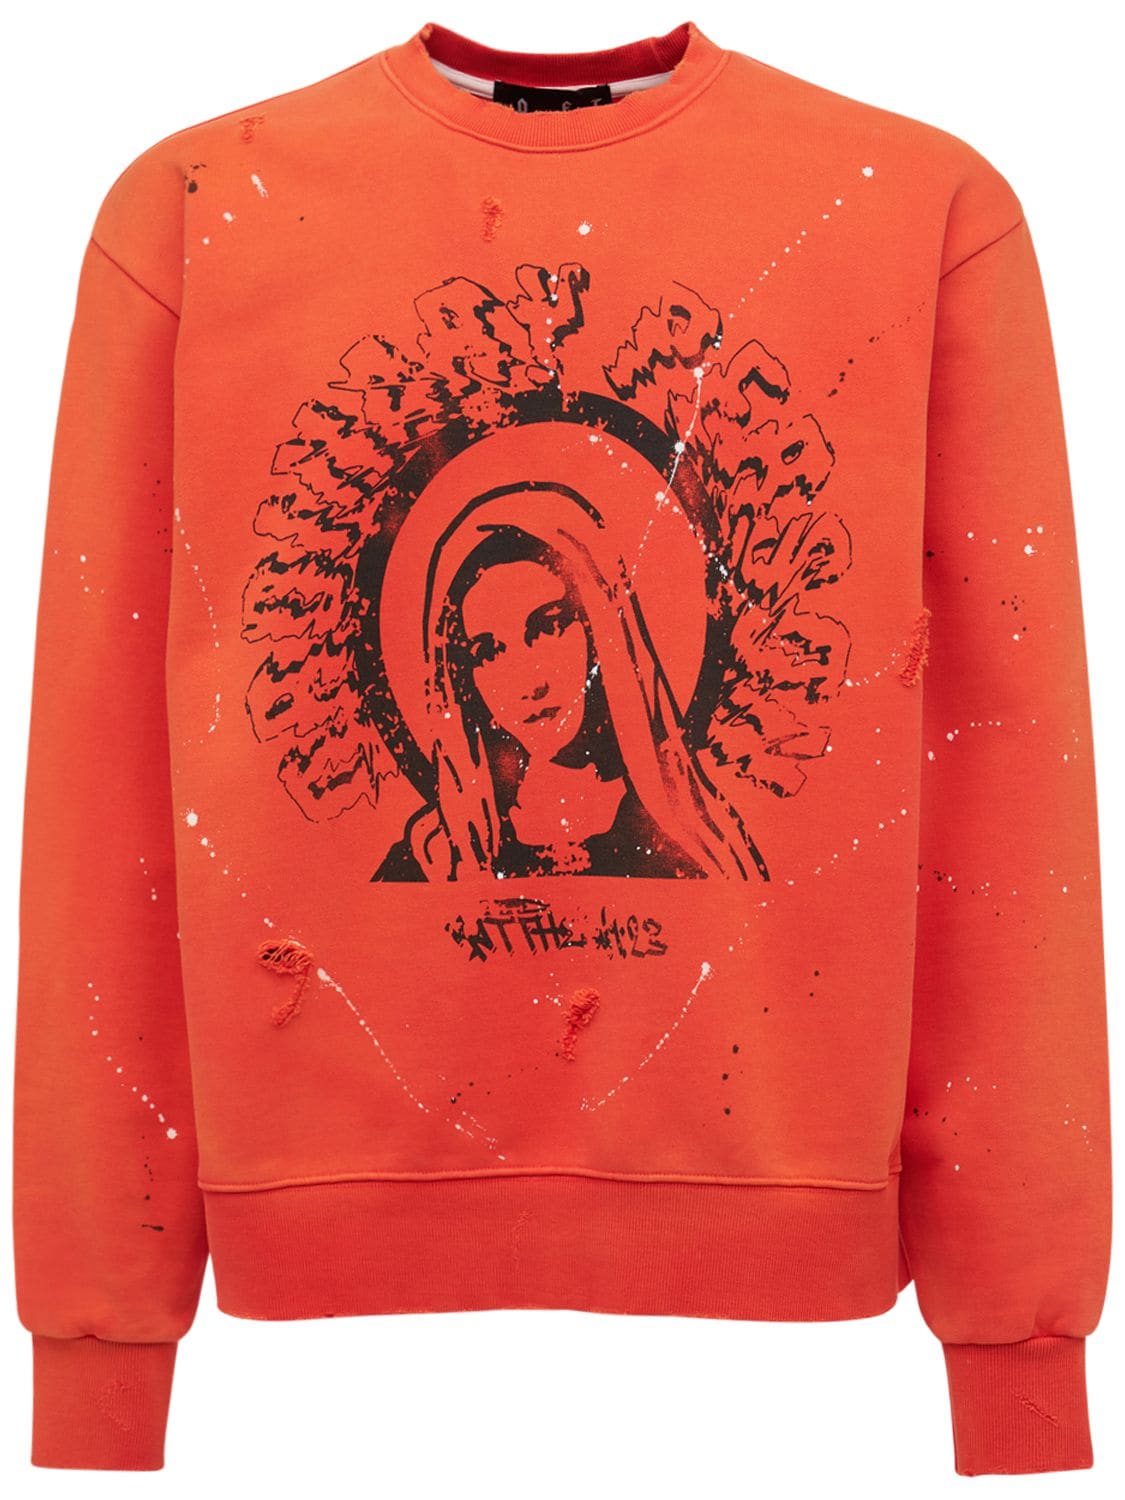 Someit O.p. Printed & Painted Cotton Sweatshirt In Orange